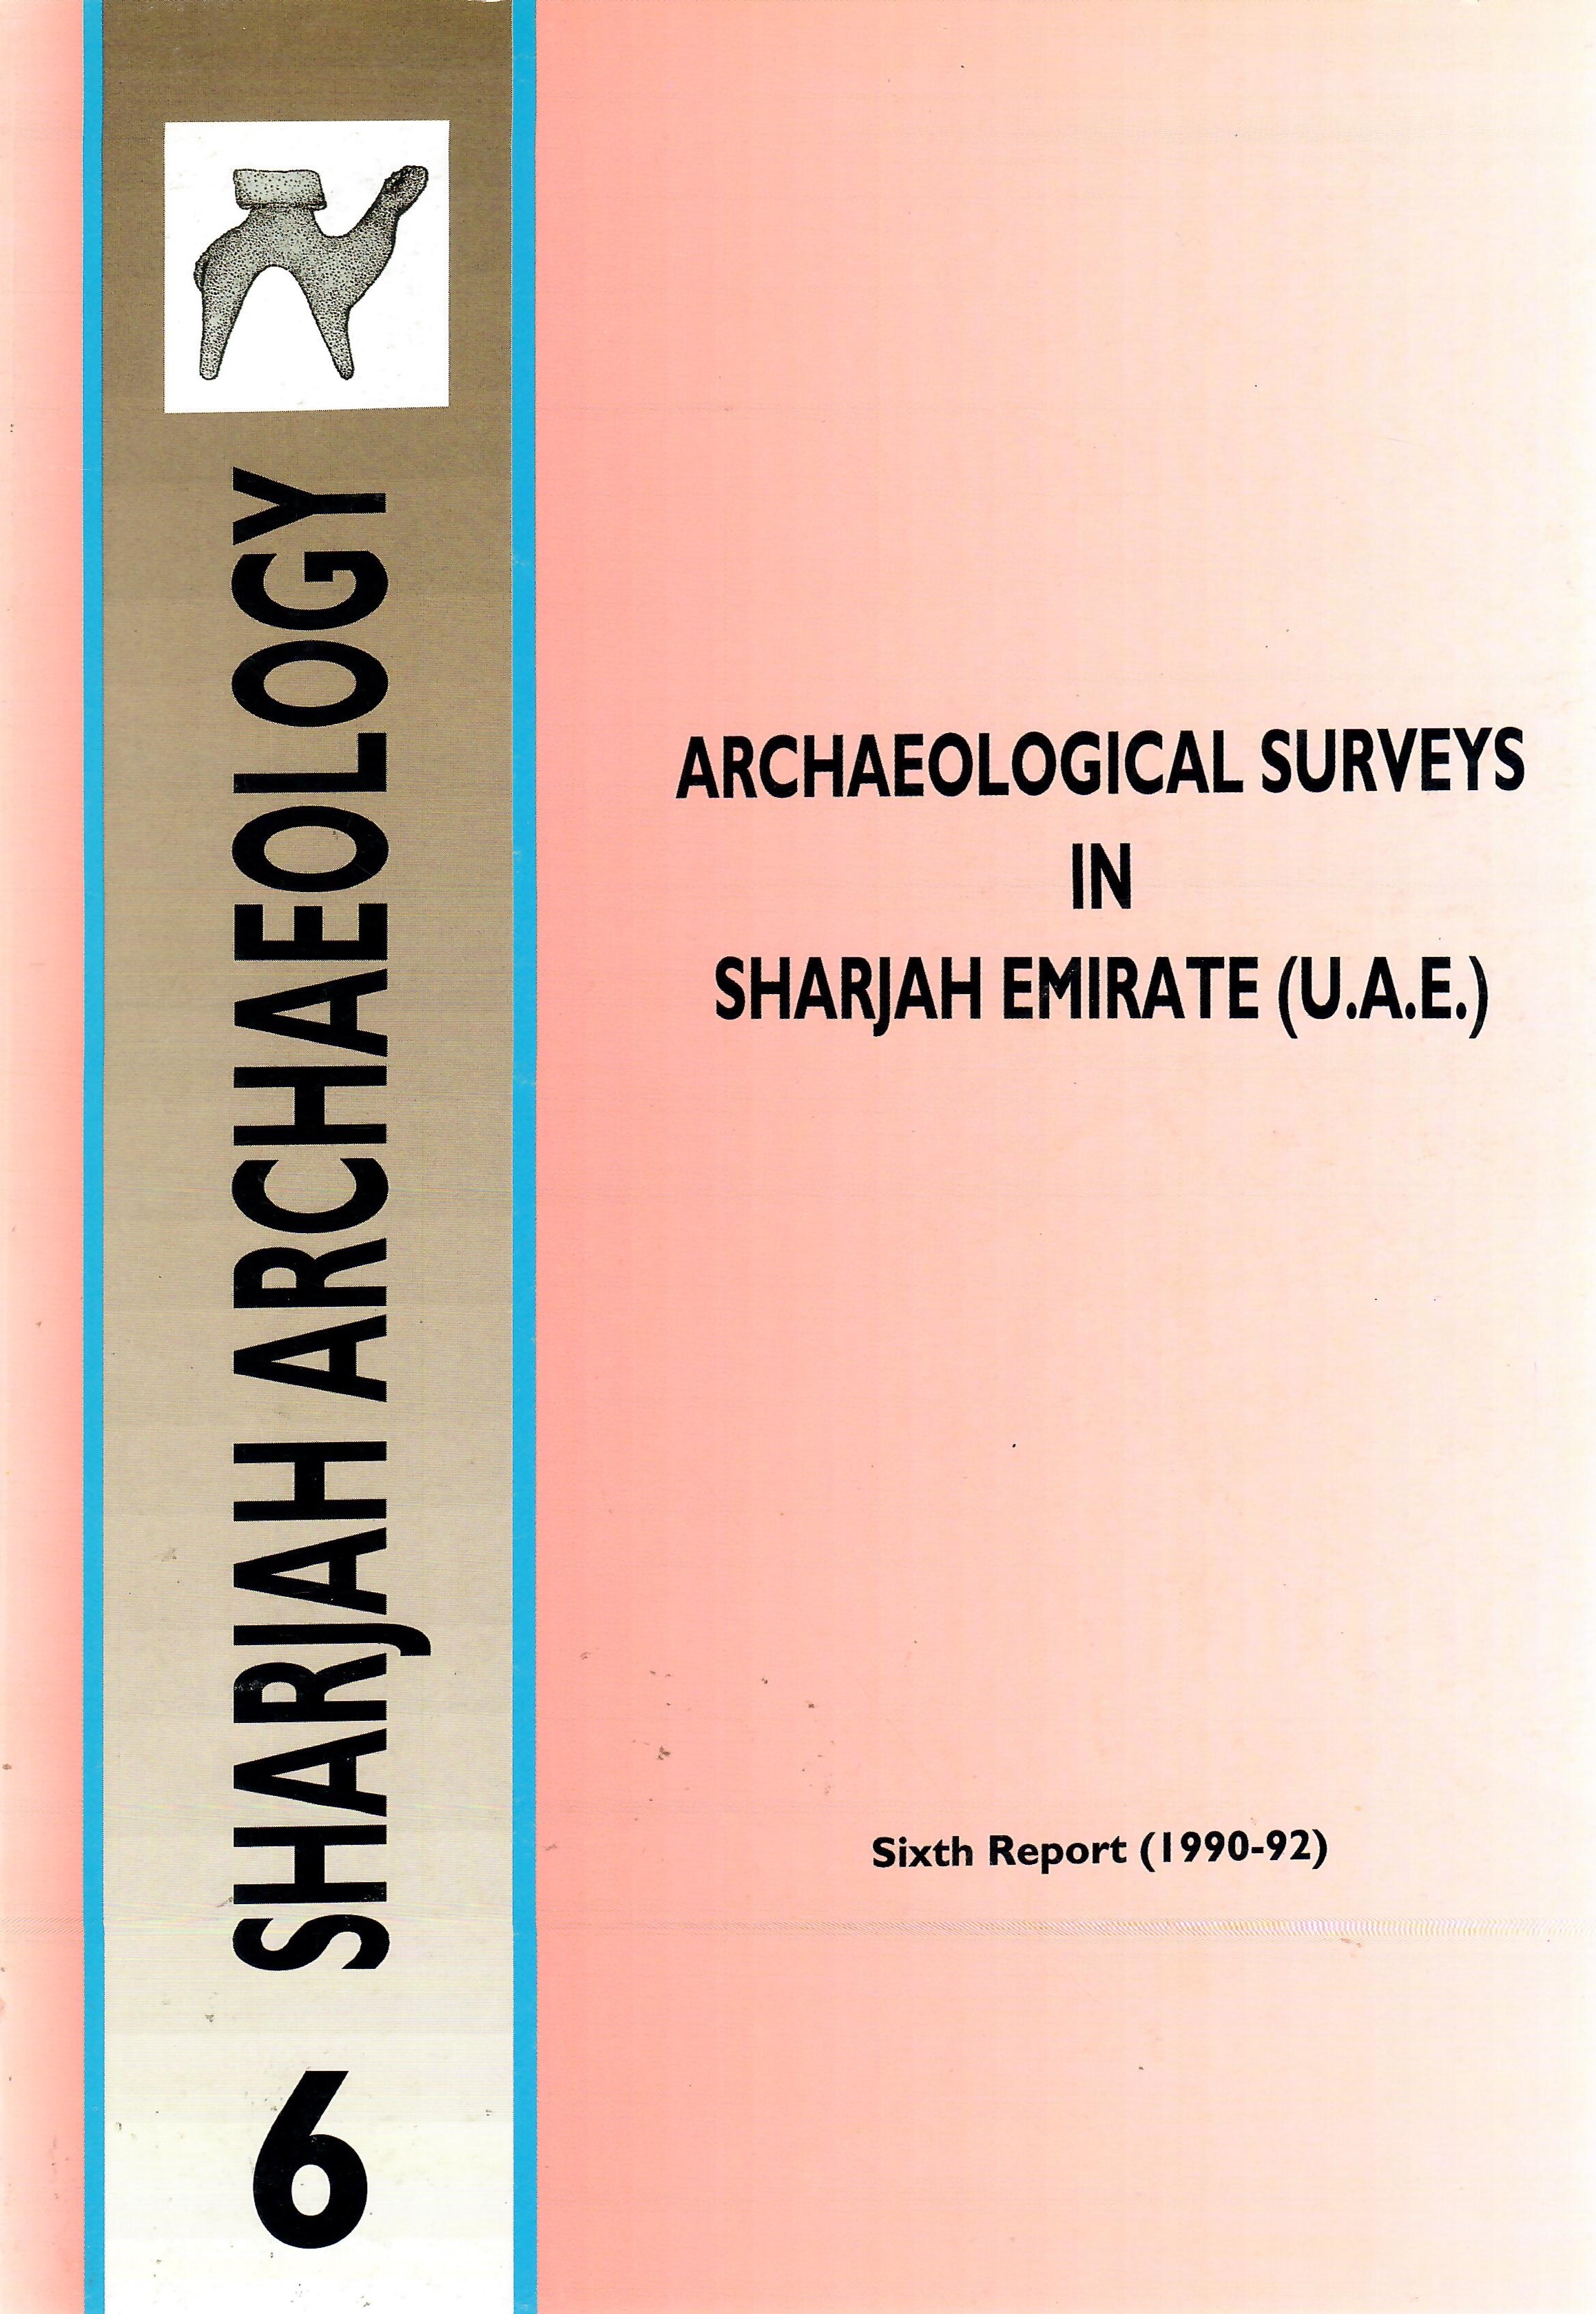 SHARJAH ARCHAEOLOGY SIXTH REPORT 1990-1992